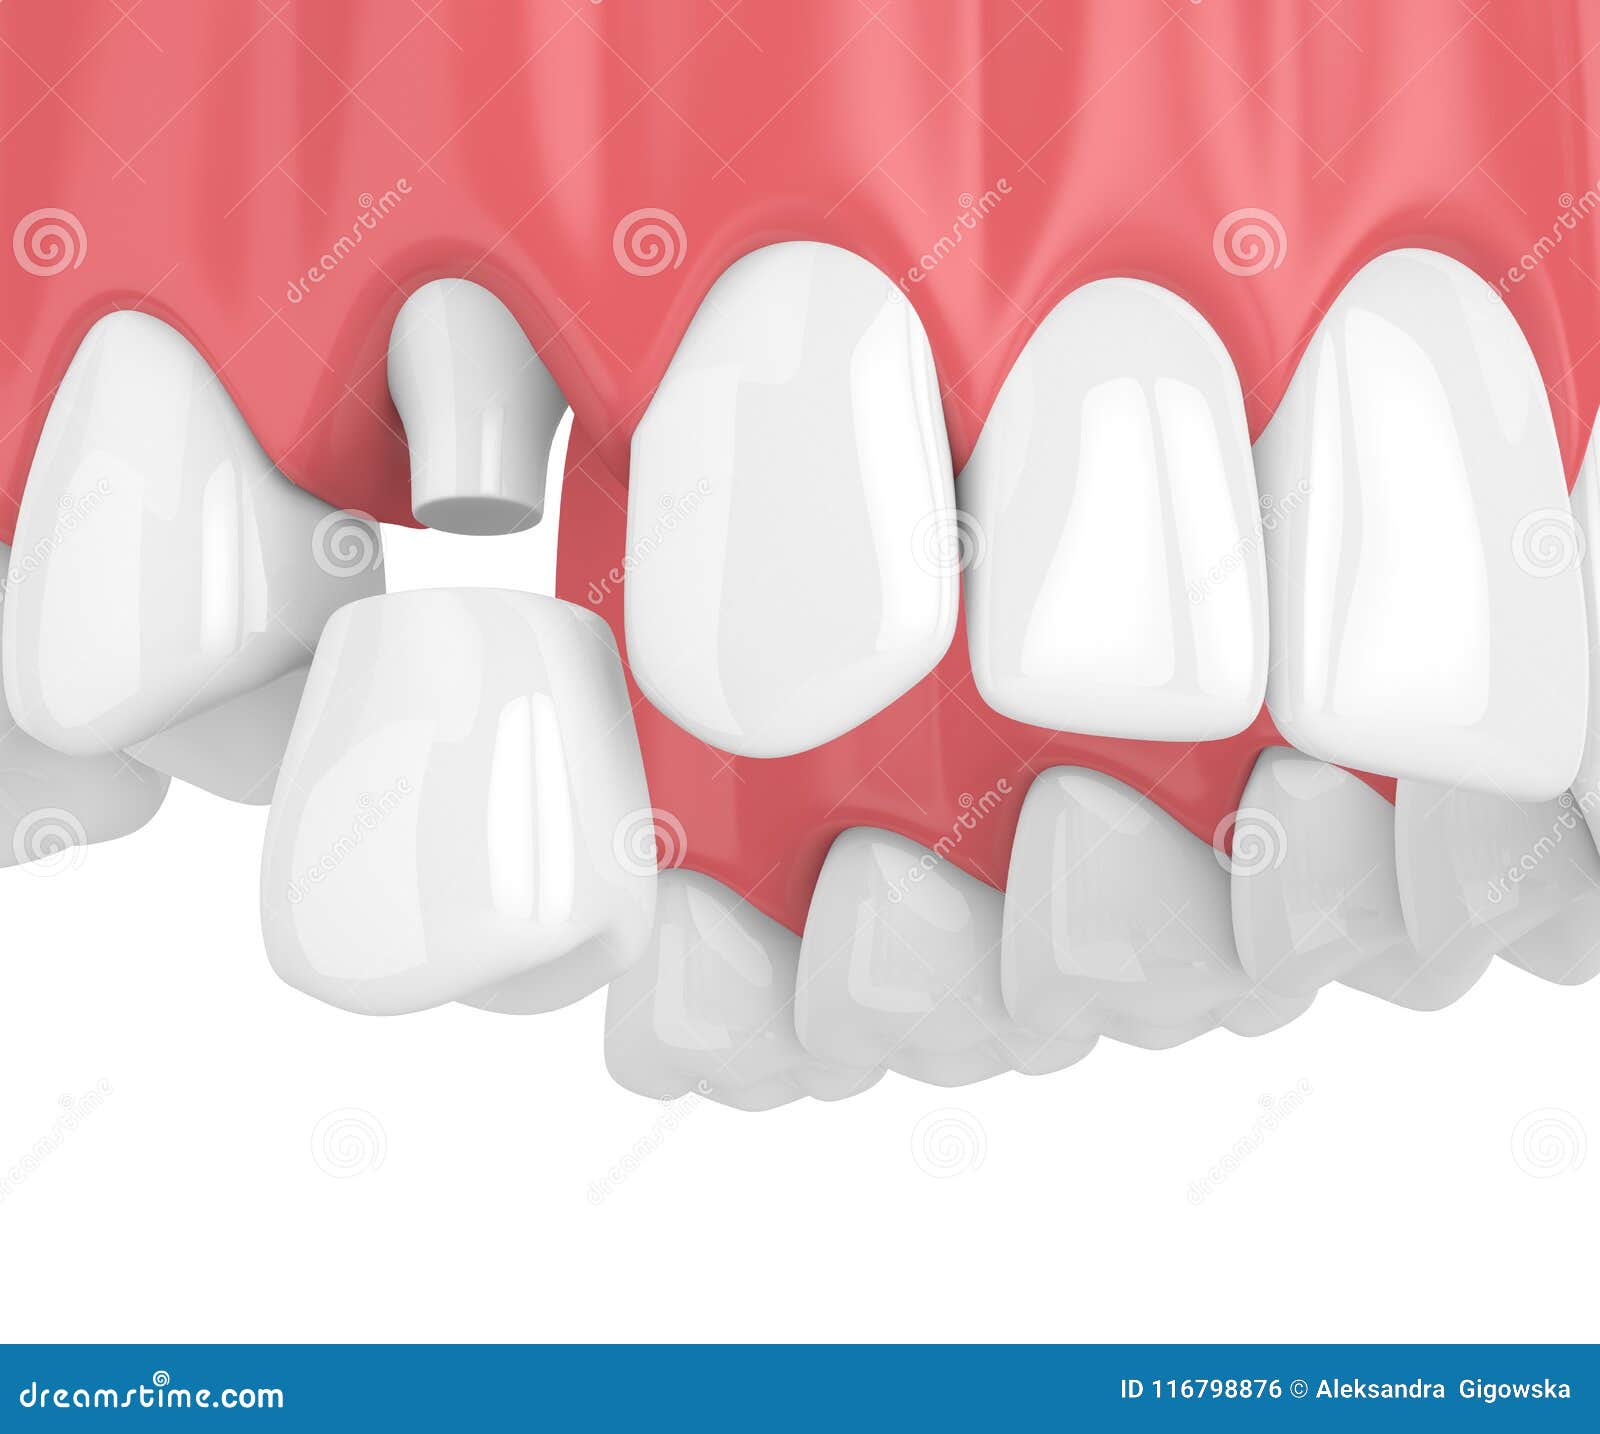 3d render of upper jaw with teeth and dental premolar crown